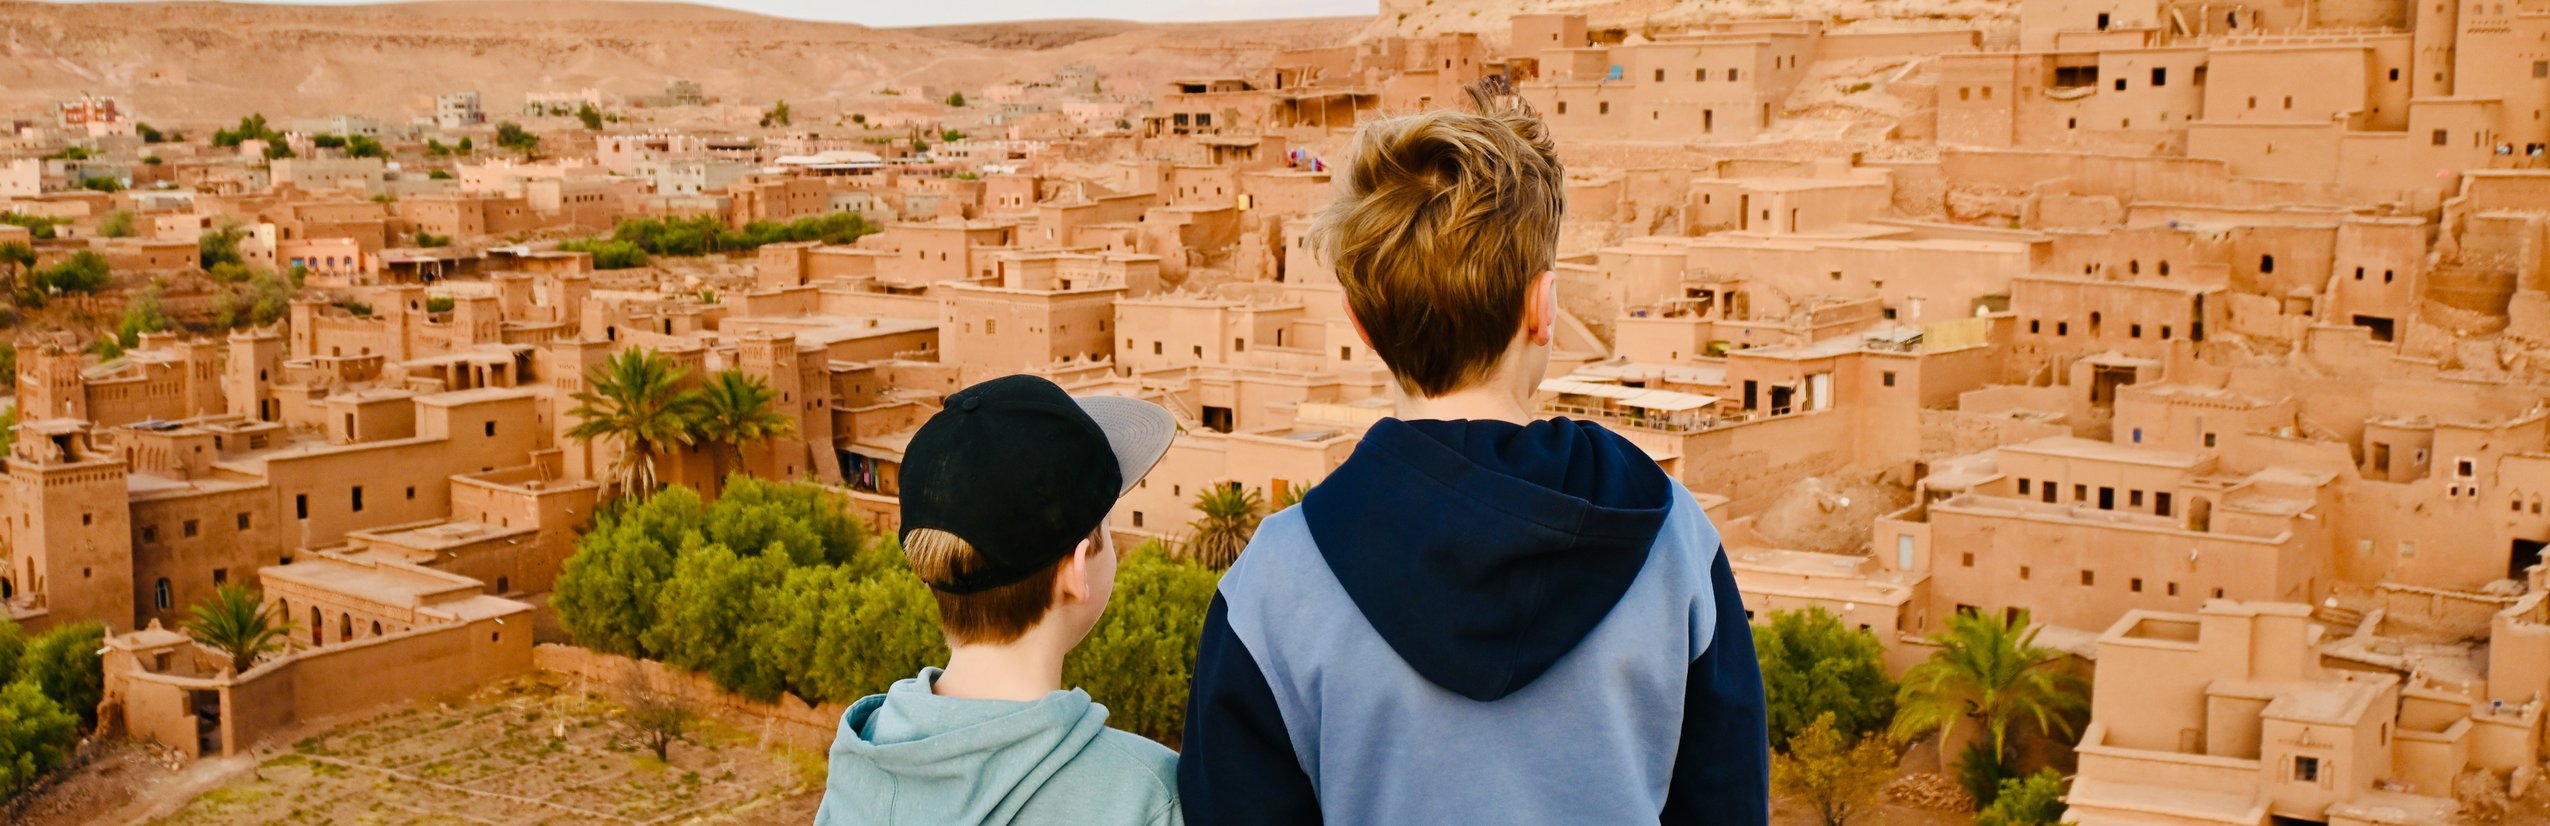 Marokko mit Kindern - Marokko Urlaub mit Kindern - Kinder blicken auf Kasbah